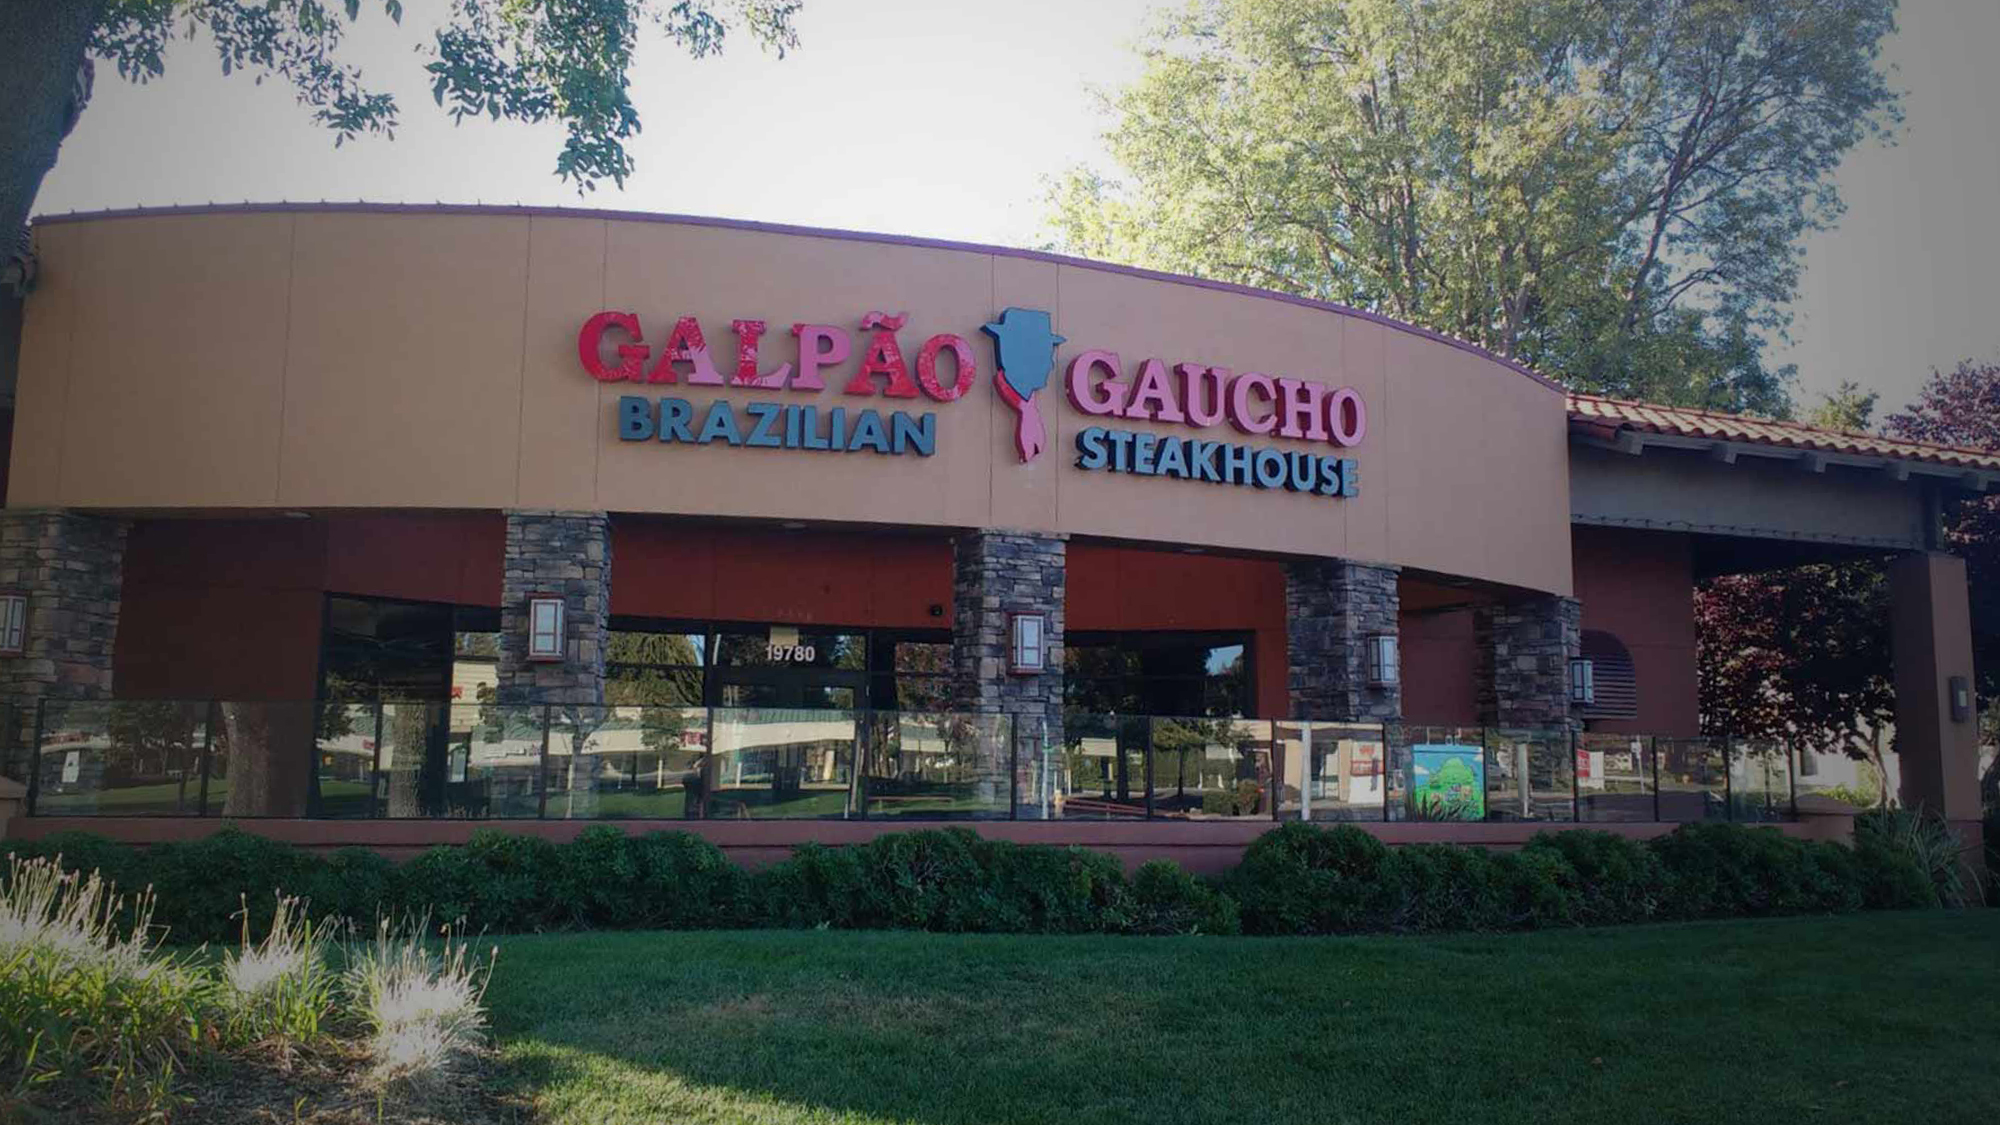 Galpão Gaucho, Brazilian Steakhouse – Brazilian steakhouse offers 